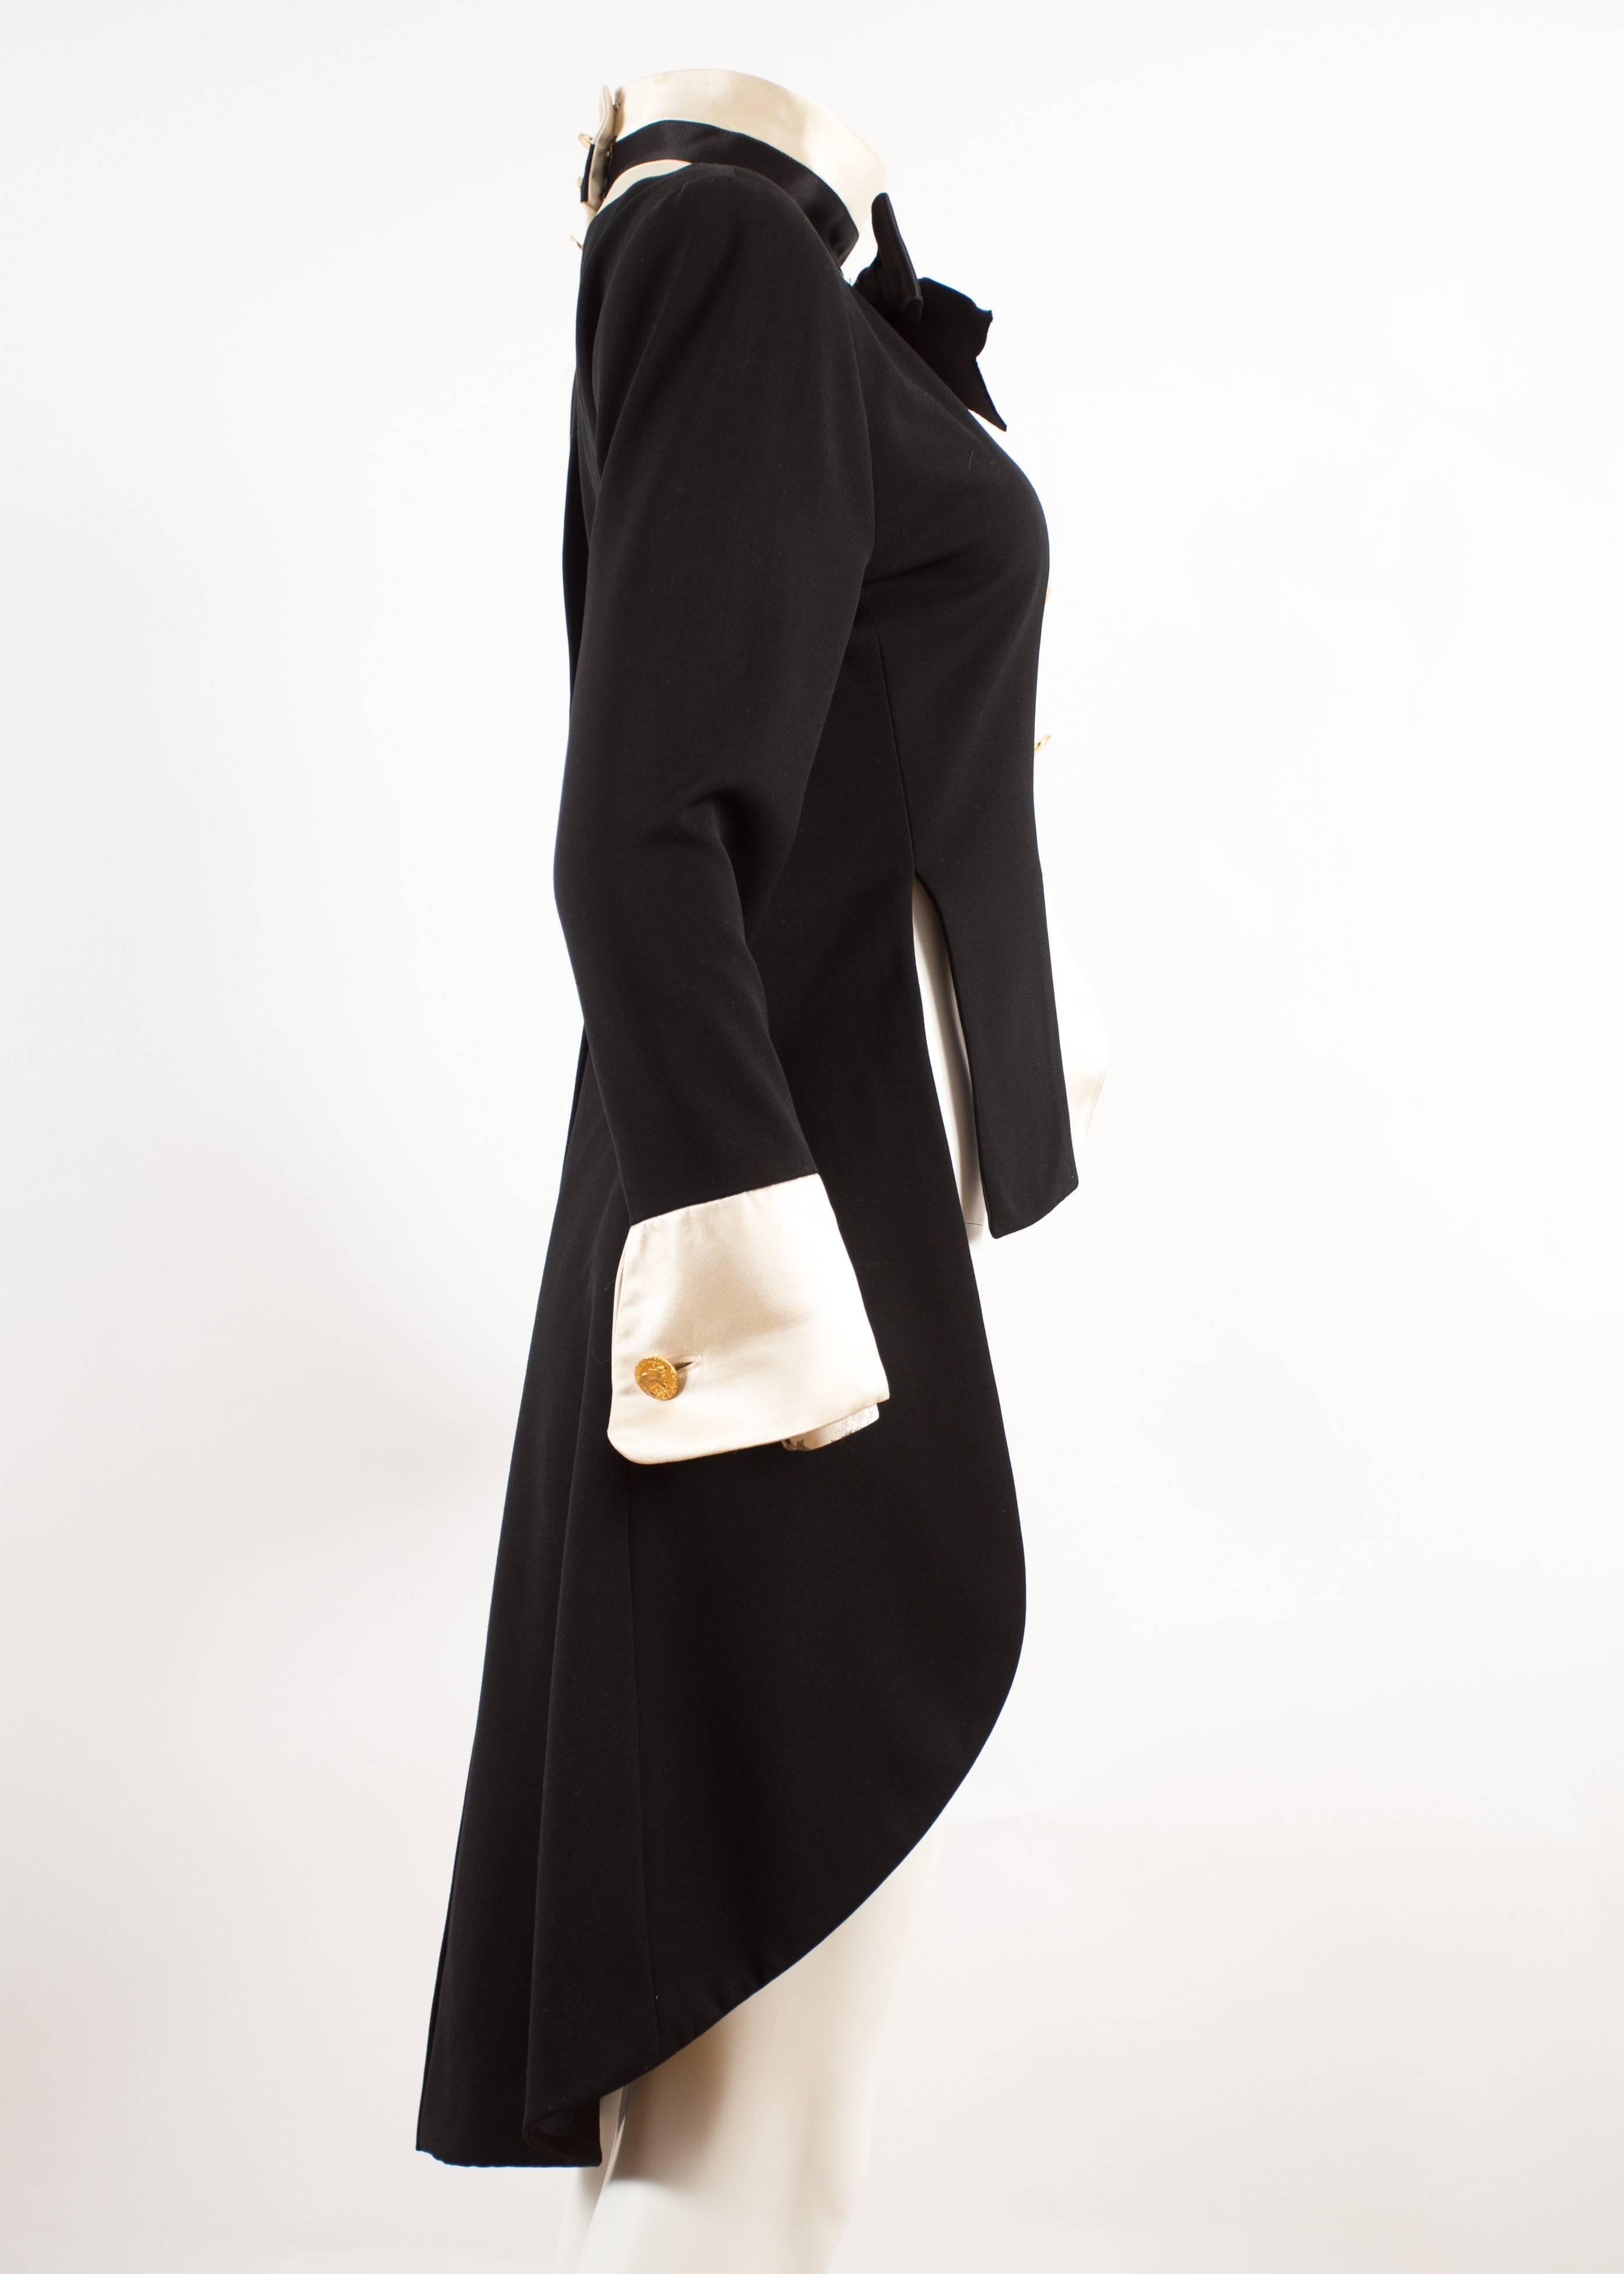 Women's Chanel 1980s black silk evening tailcoat 